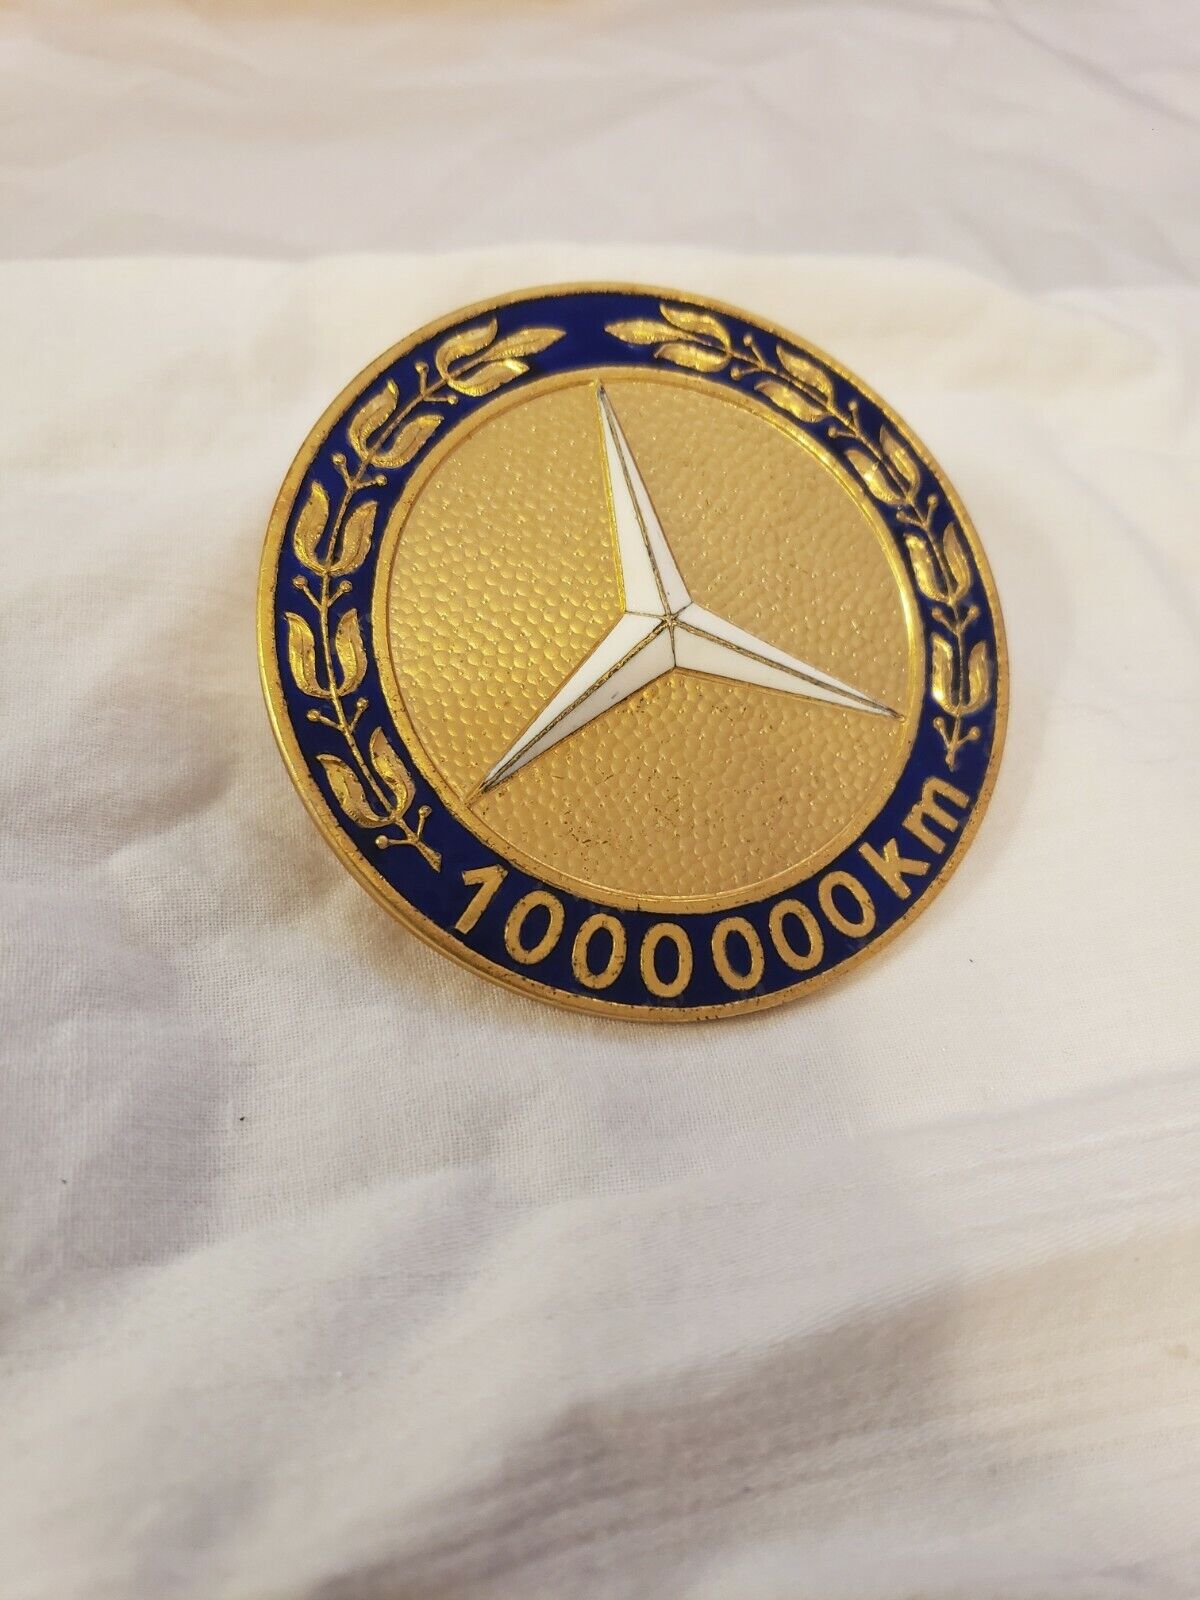 Vintage 1960s Mercedes Preissler mileage grill badge west Germany 1,000,000km